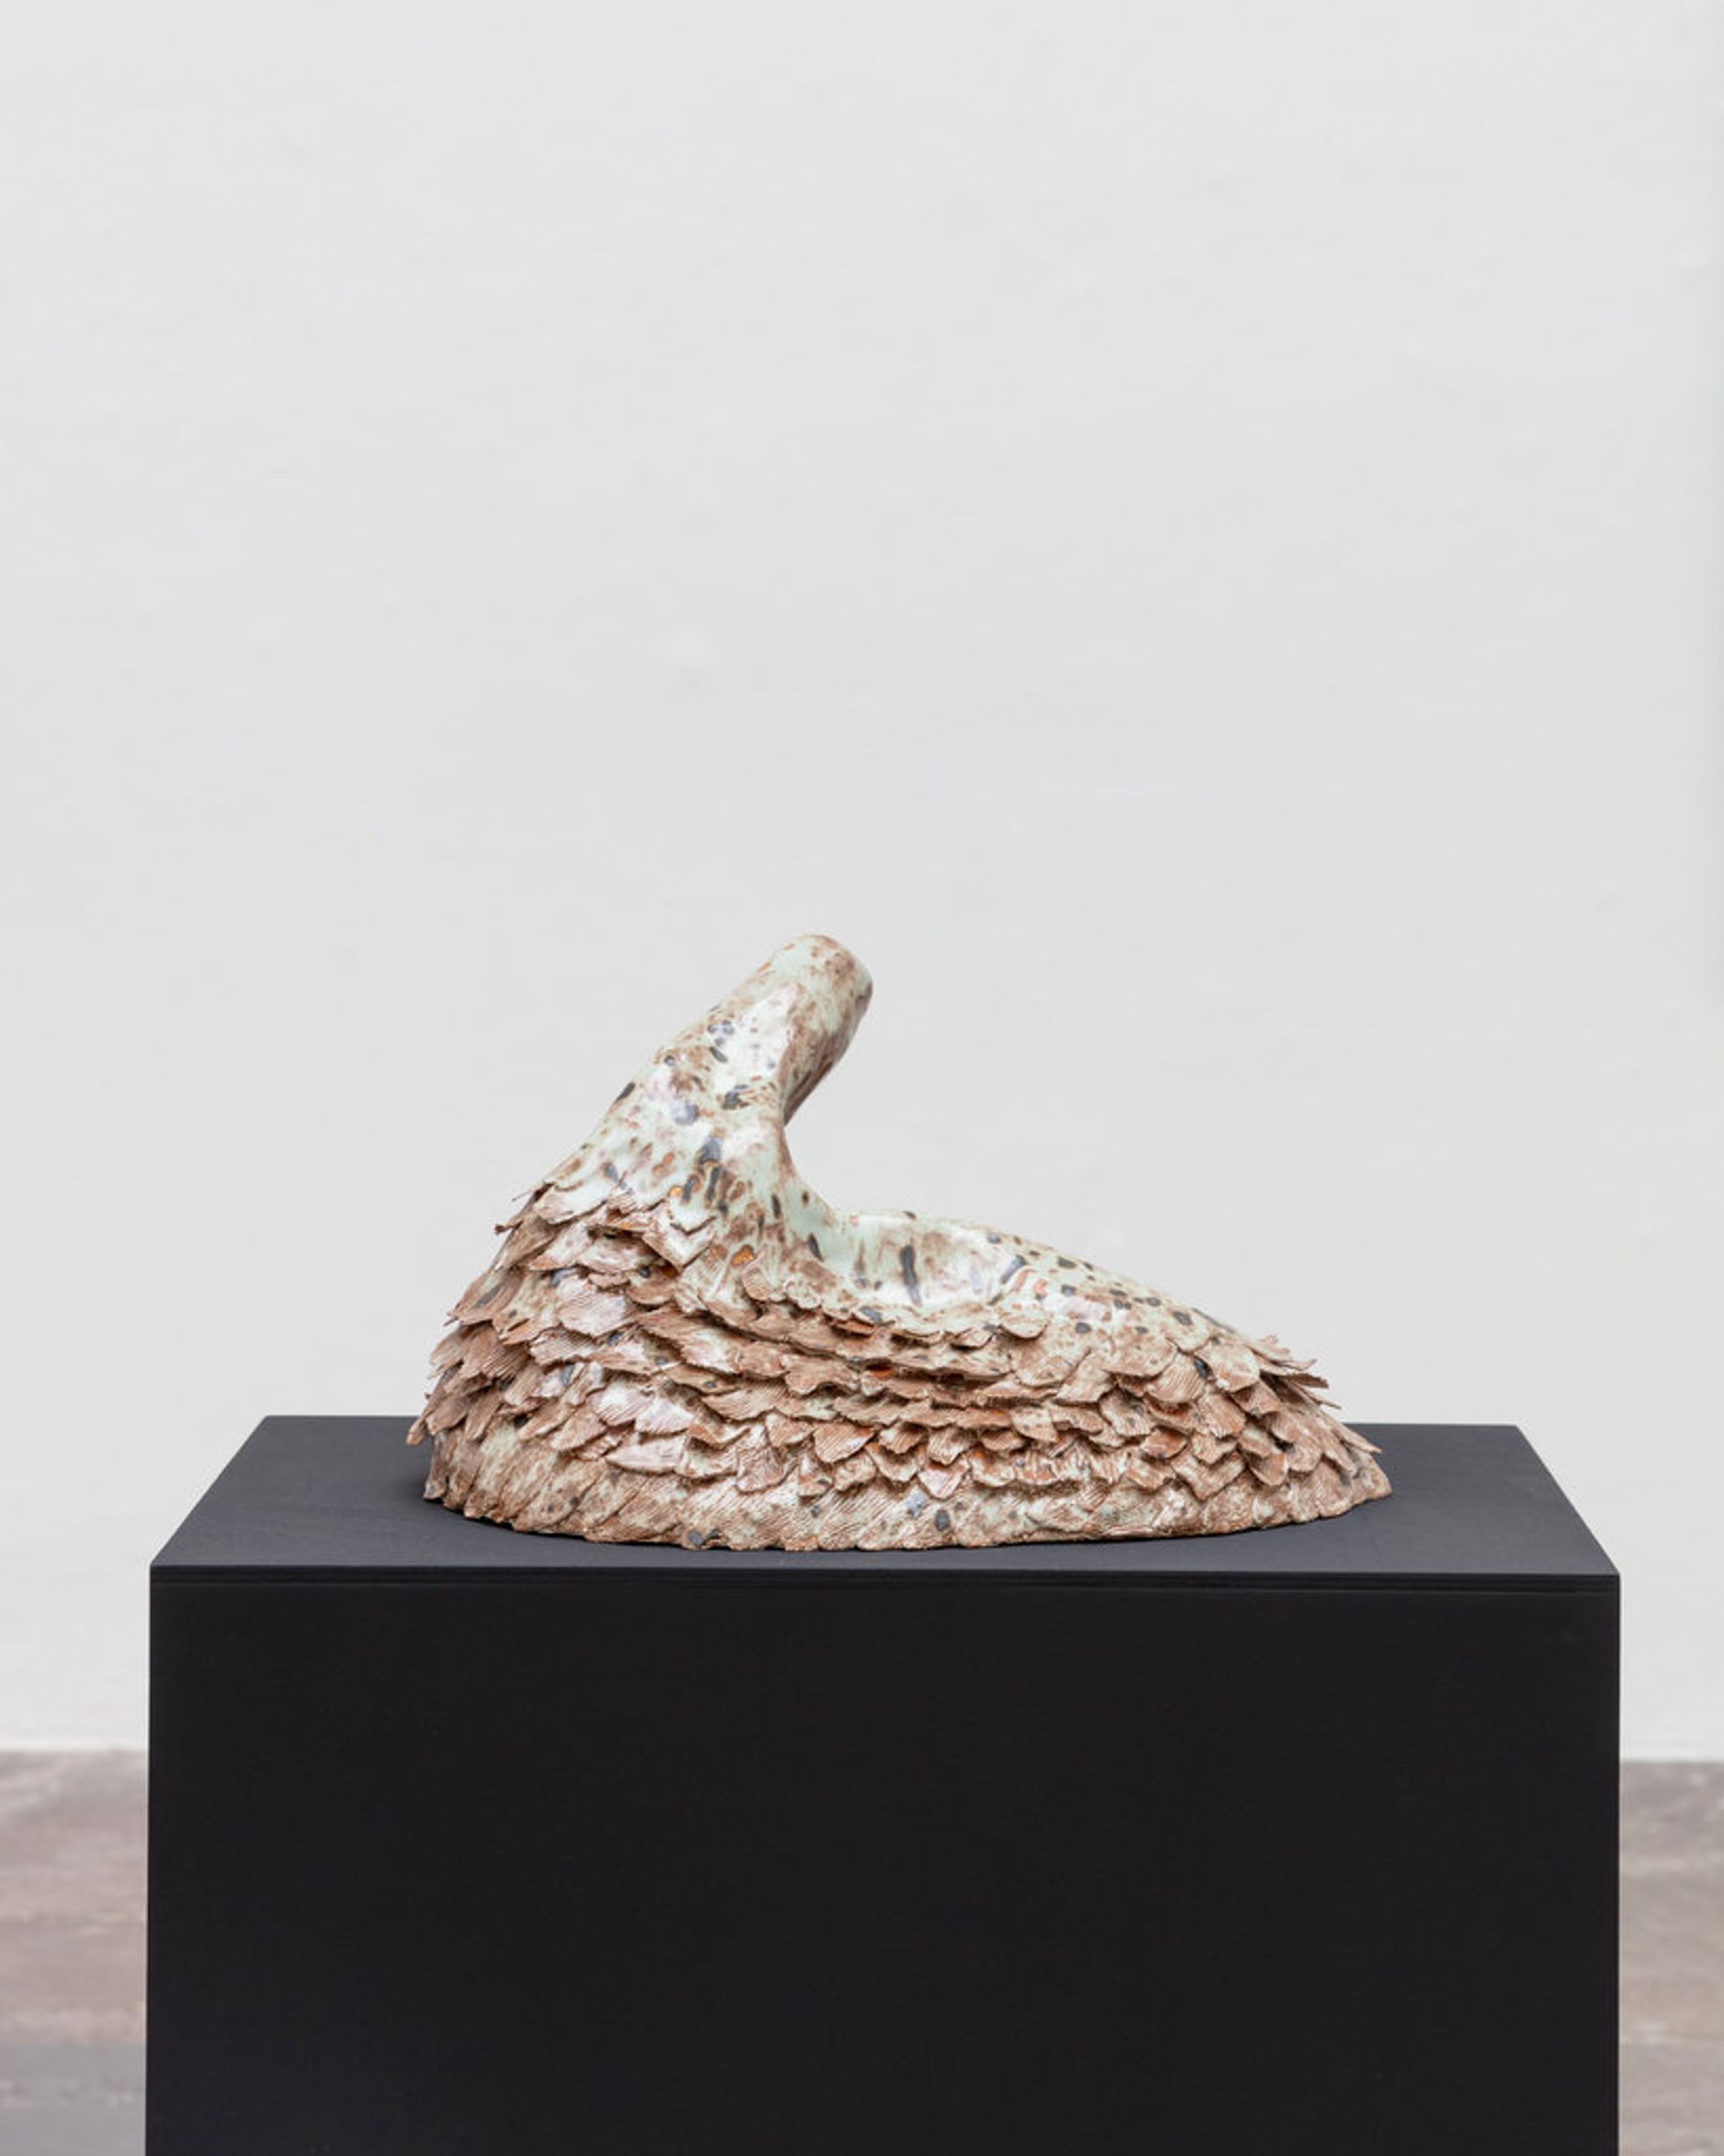 Veronika Hilger, Untitled, 2020, ceramic, glazed
24 × 44 × 30 cm